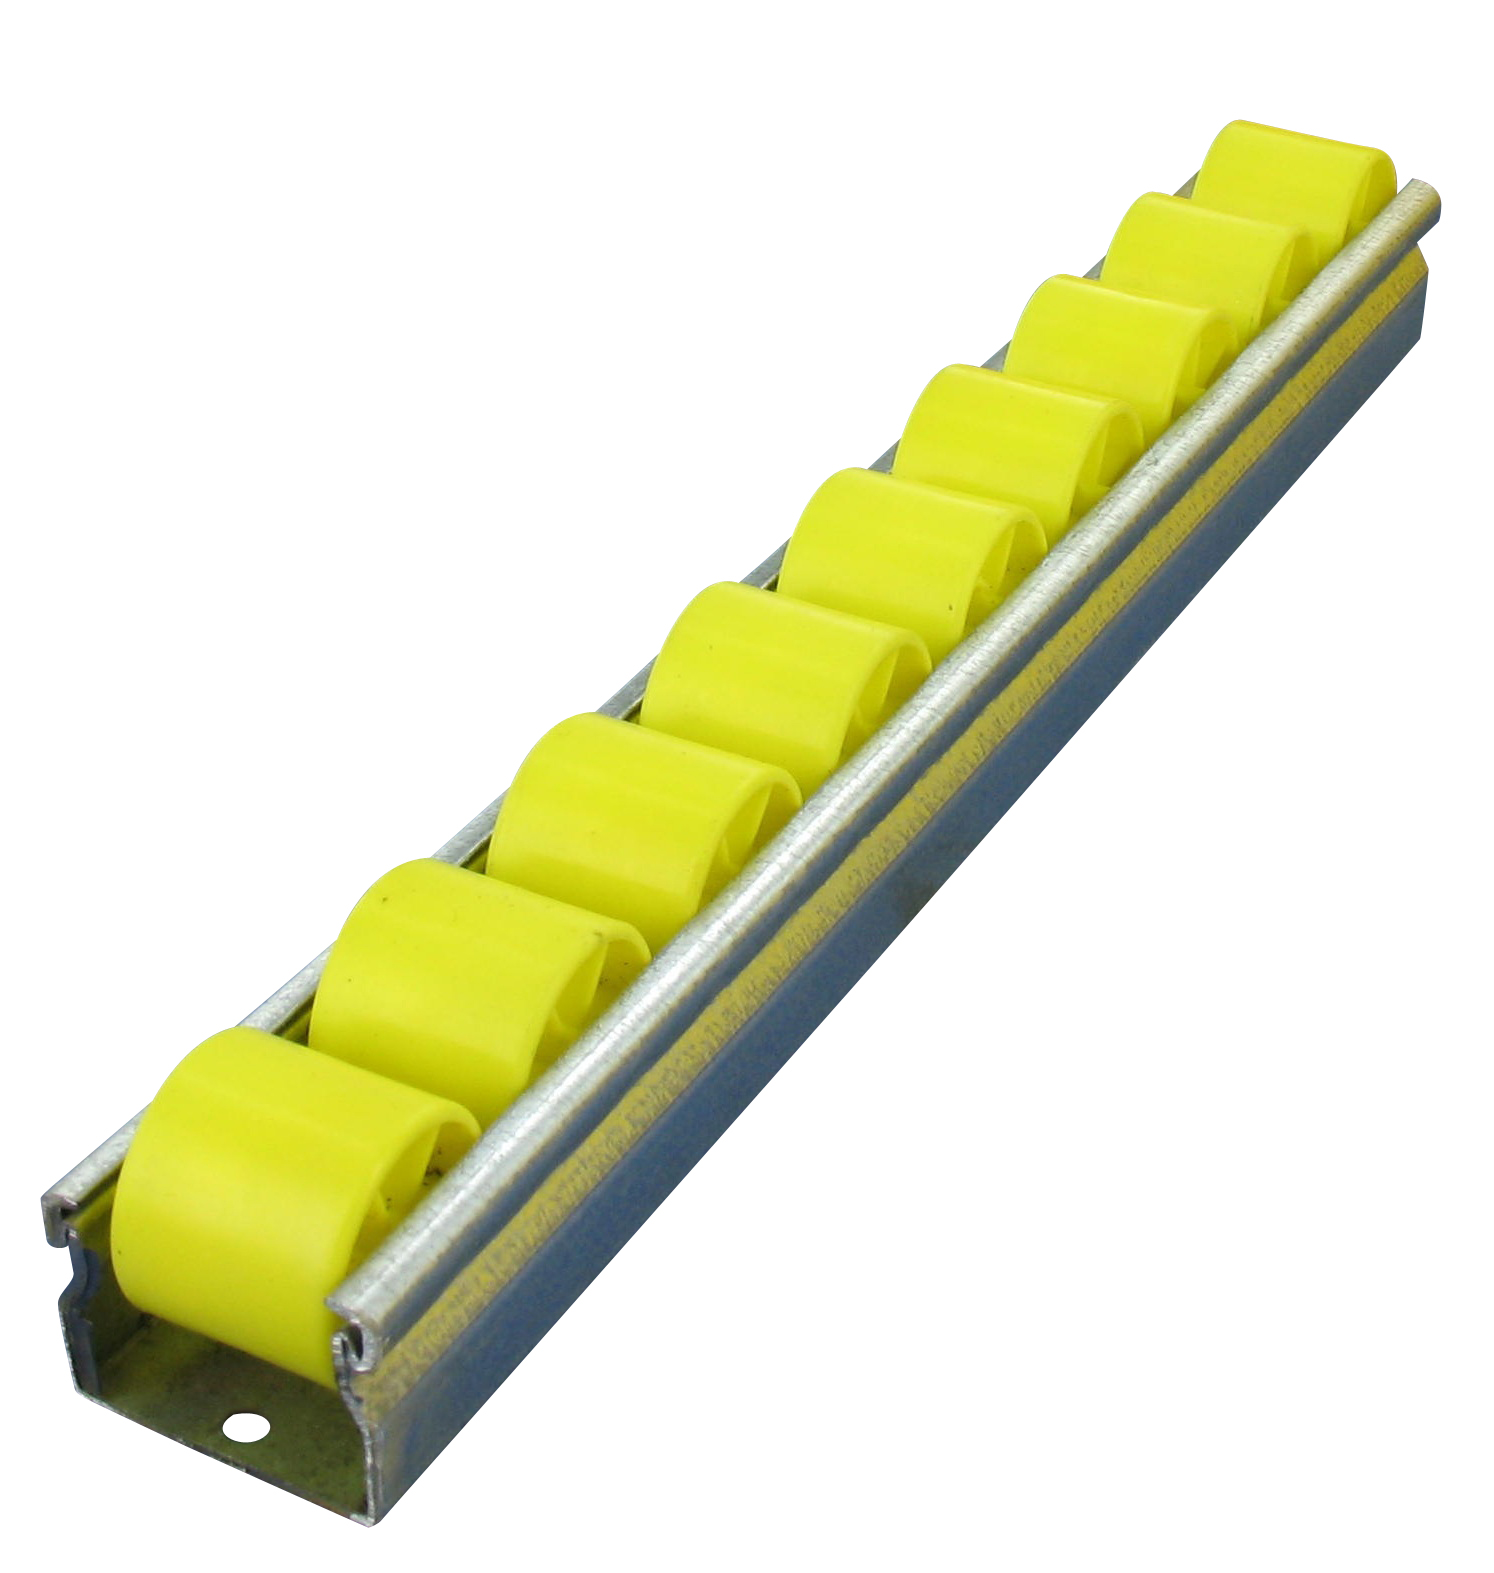 Röllchenleiste KRN  Serie, Ø28x25mm, Stahlblech, gelb / grau, 8 KG Tragfähigkeit, 700575